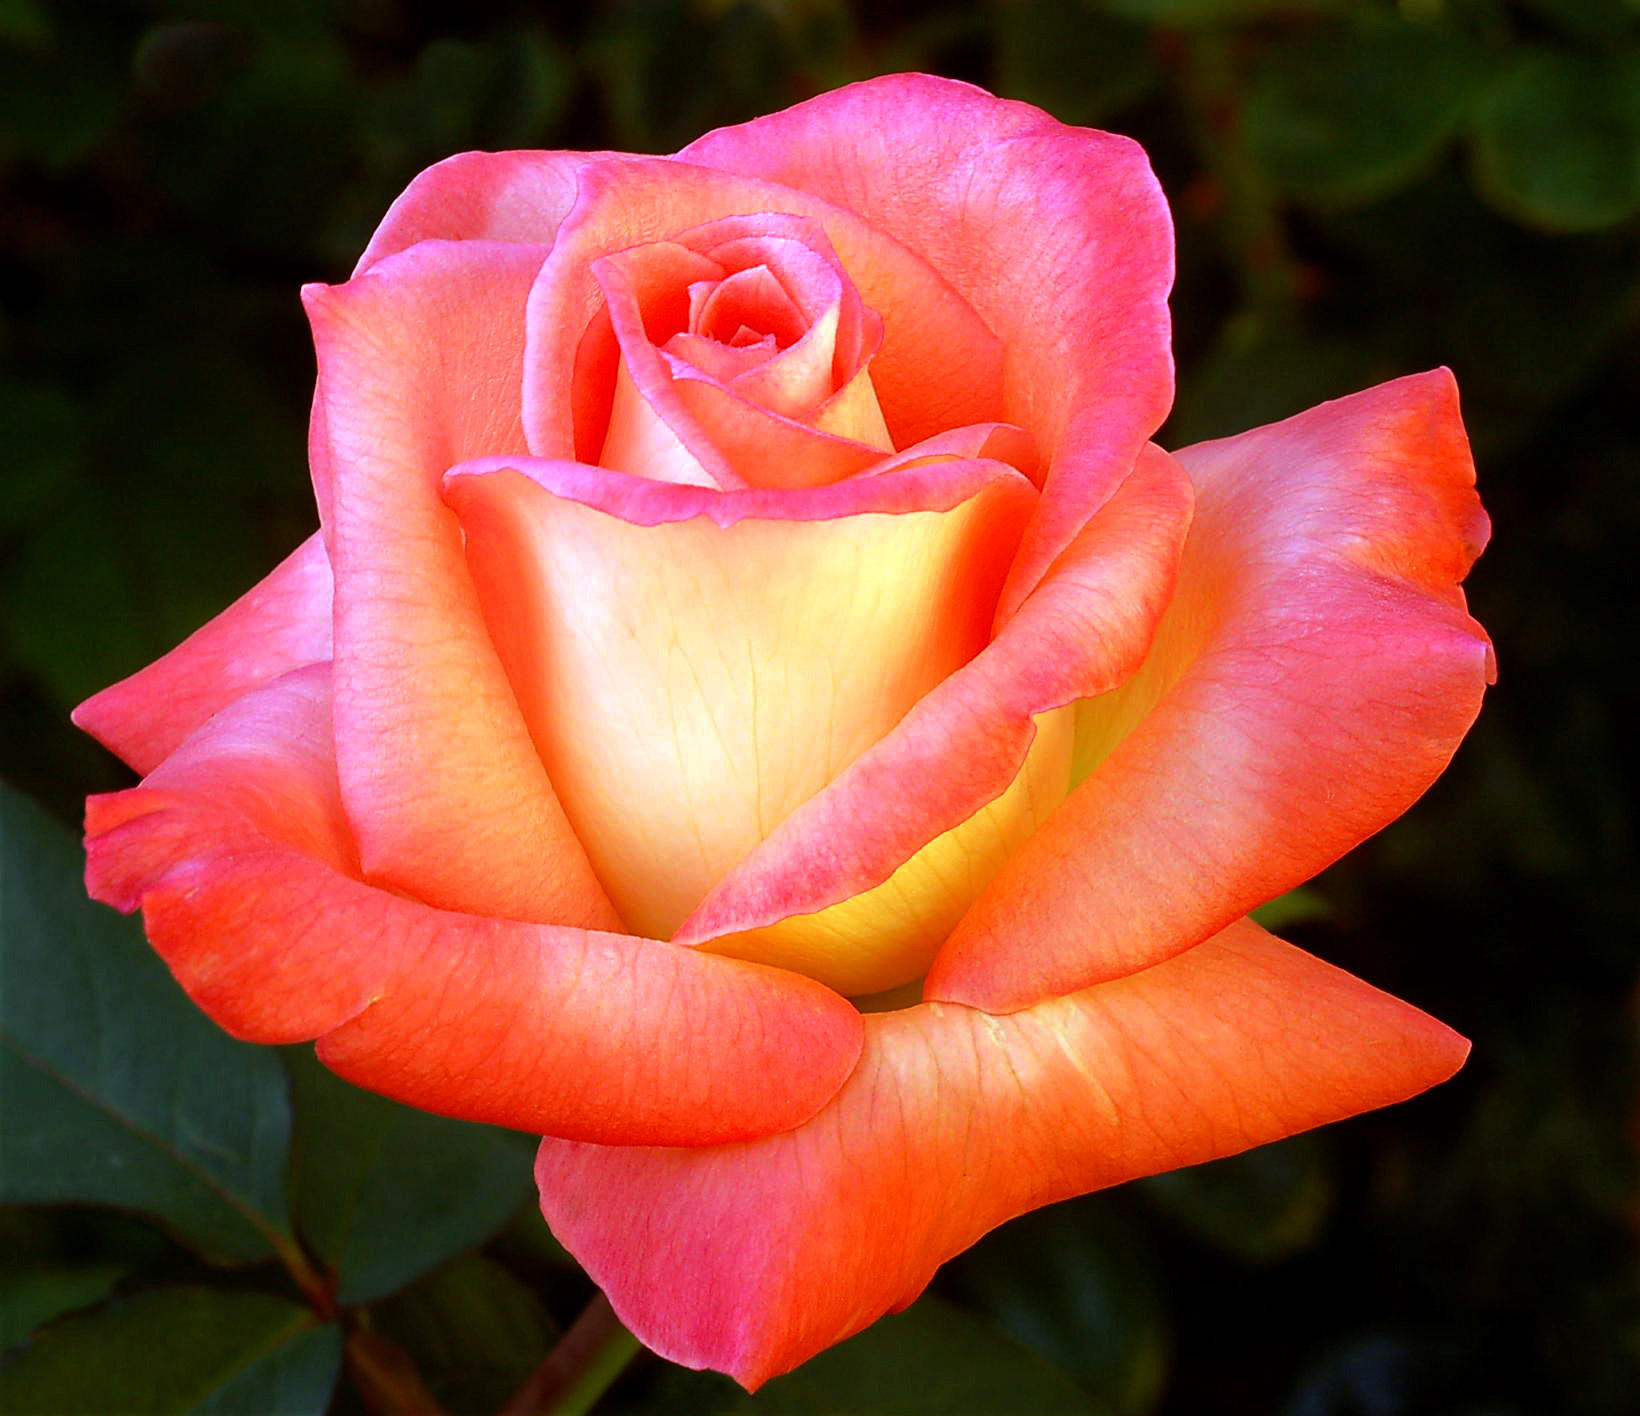 beautiful pictures of roses for wallpaper,flower,rose,garden roses,flowering plant,julia child rose